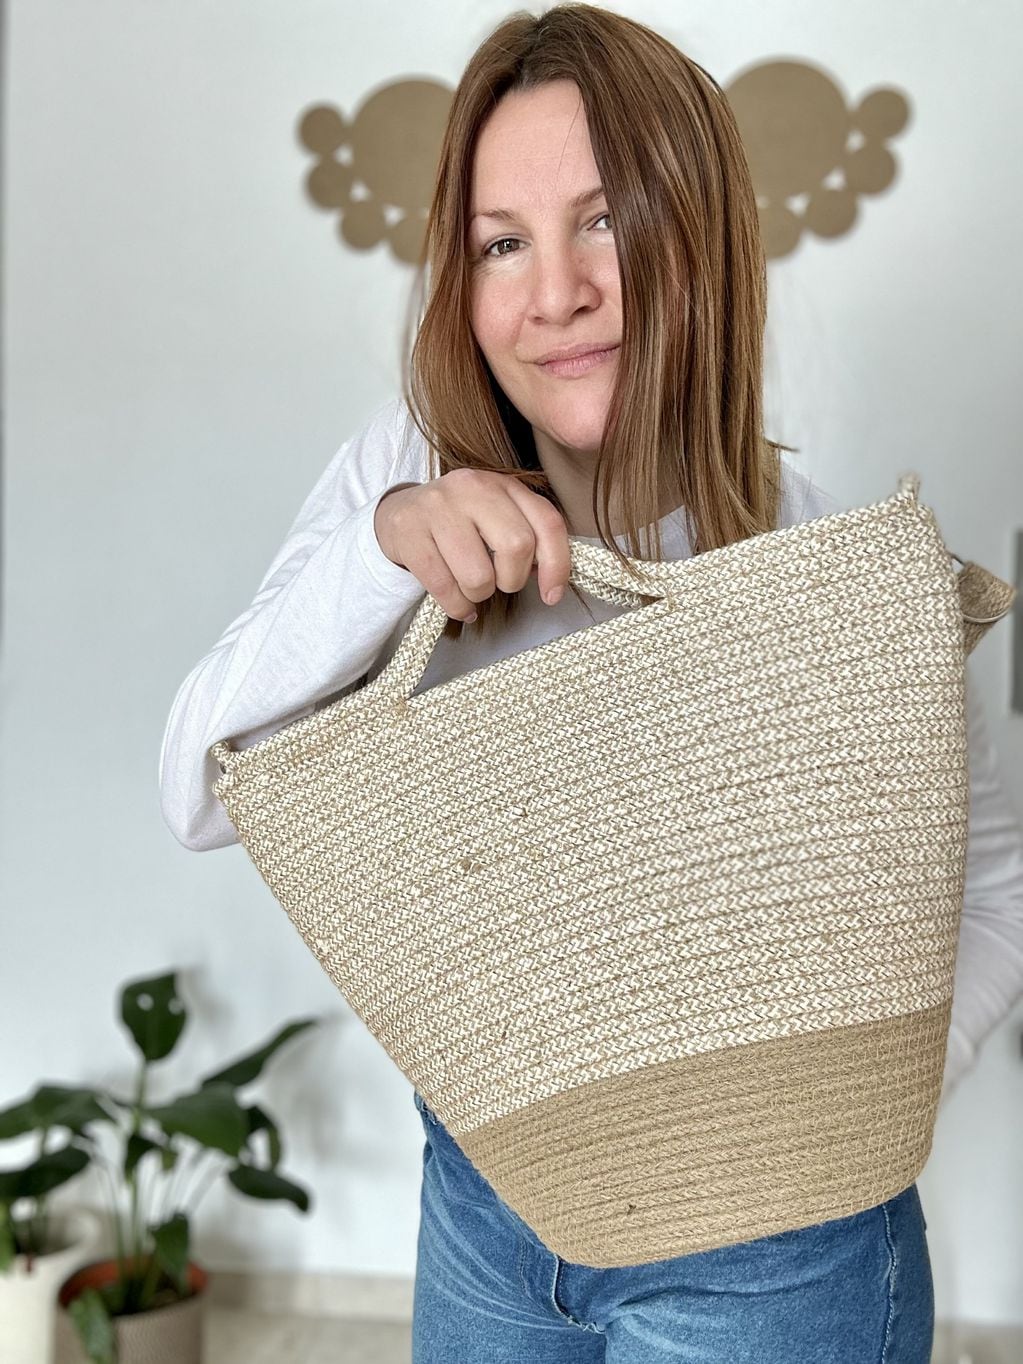 Cristina Carrasco, de Romana Deco, con uno de sus bolsos de cestería nórdica. Foto: Gentileza